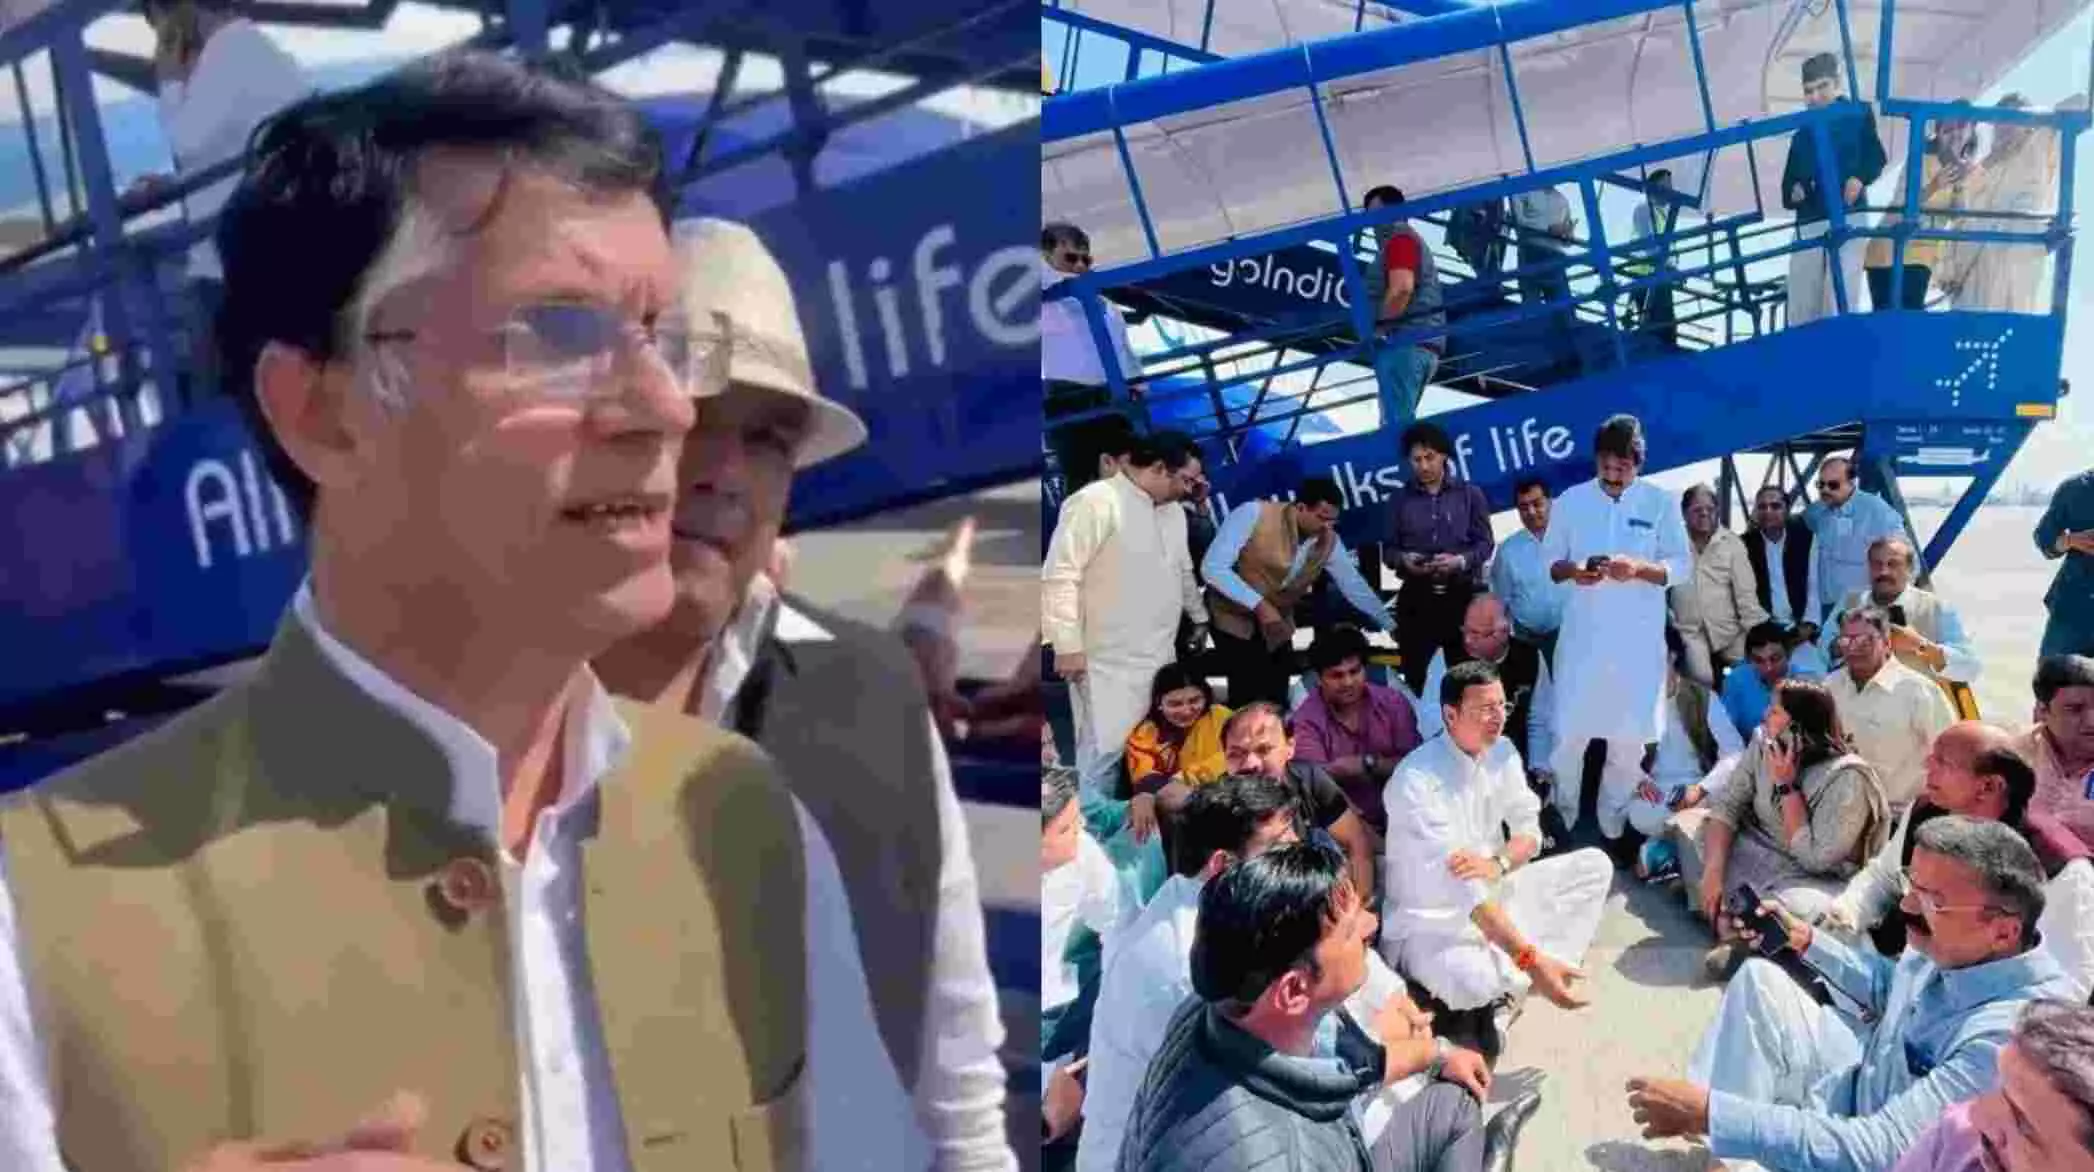 #PawanKhera : कांग्रेस प्रवक्ता पवन खेड़ा को दिल्ली एयरपोर्ट पर असम पुलिस ने किया गिरफ्तार